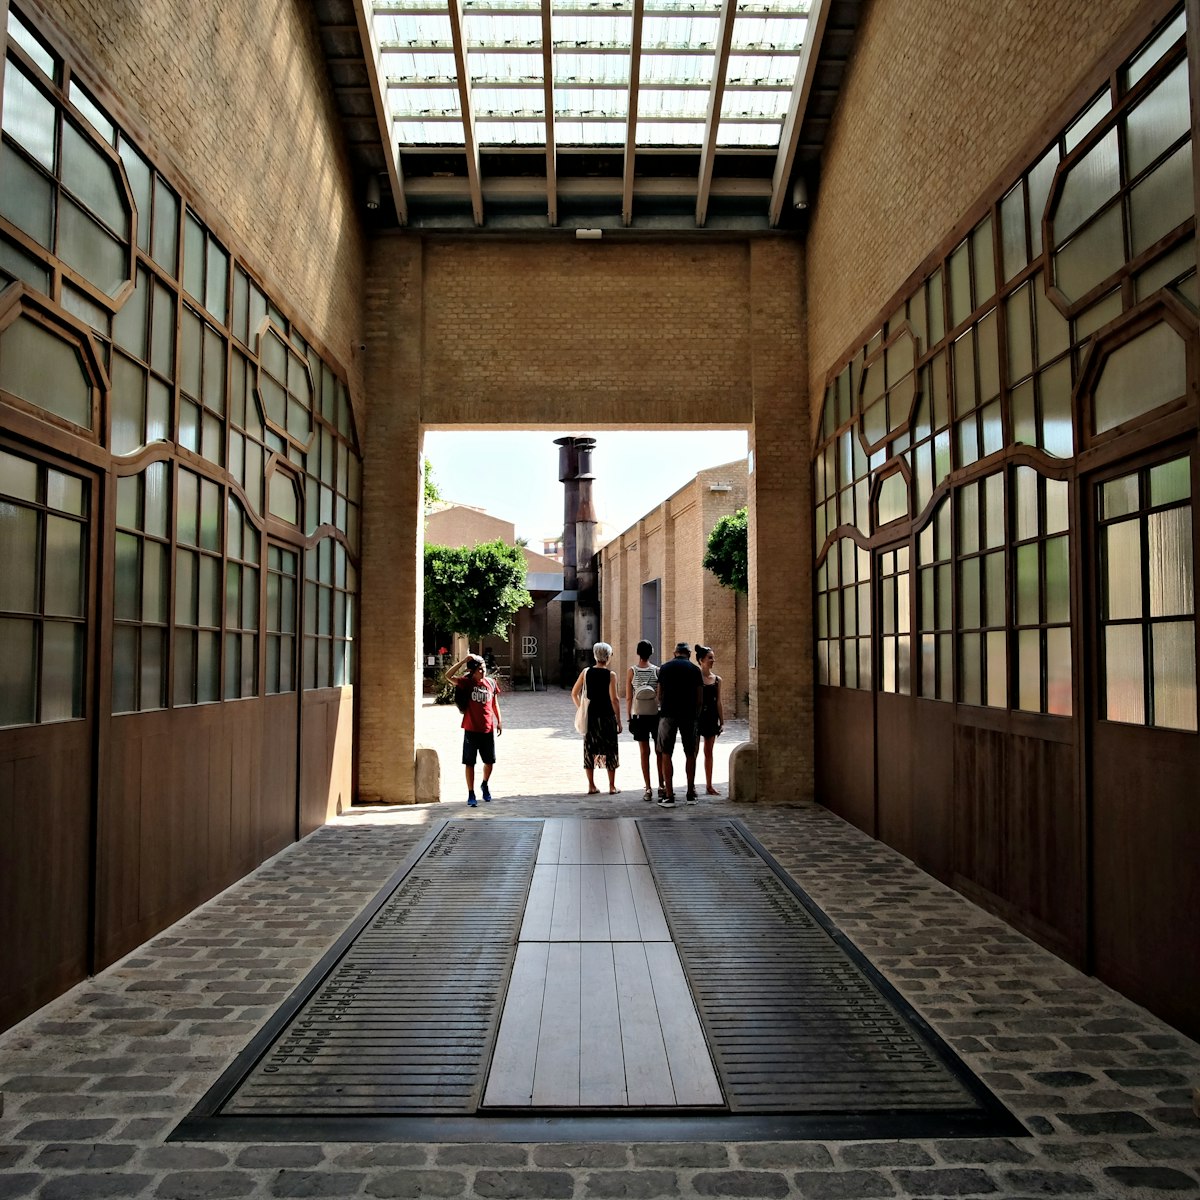 Entrance of the Art Center "Bombas Gens" in Valencia.